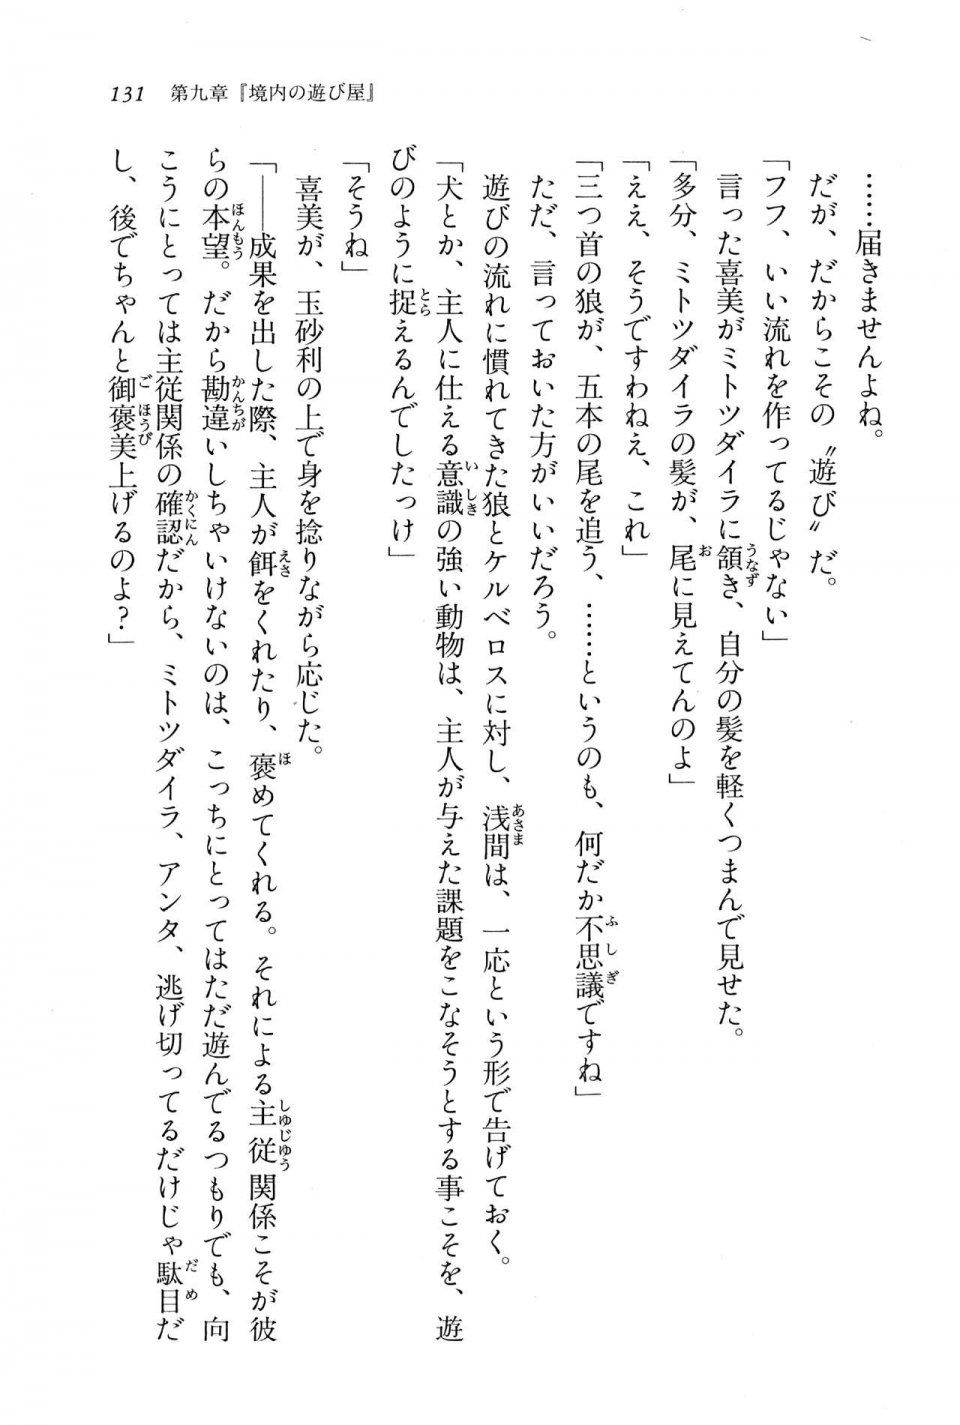 Kyoukai Senjou no Horizon BD Special Mininovel Vol 6(3B) - Photo #135